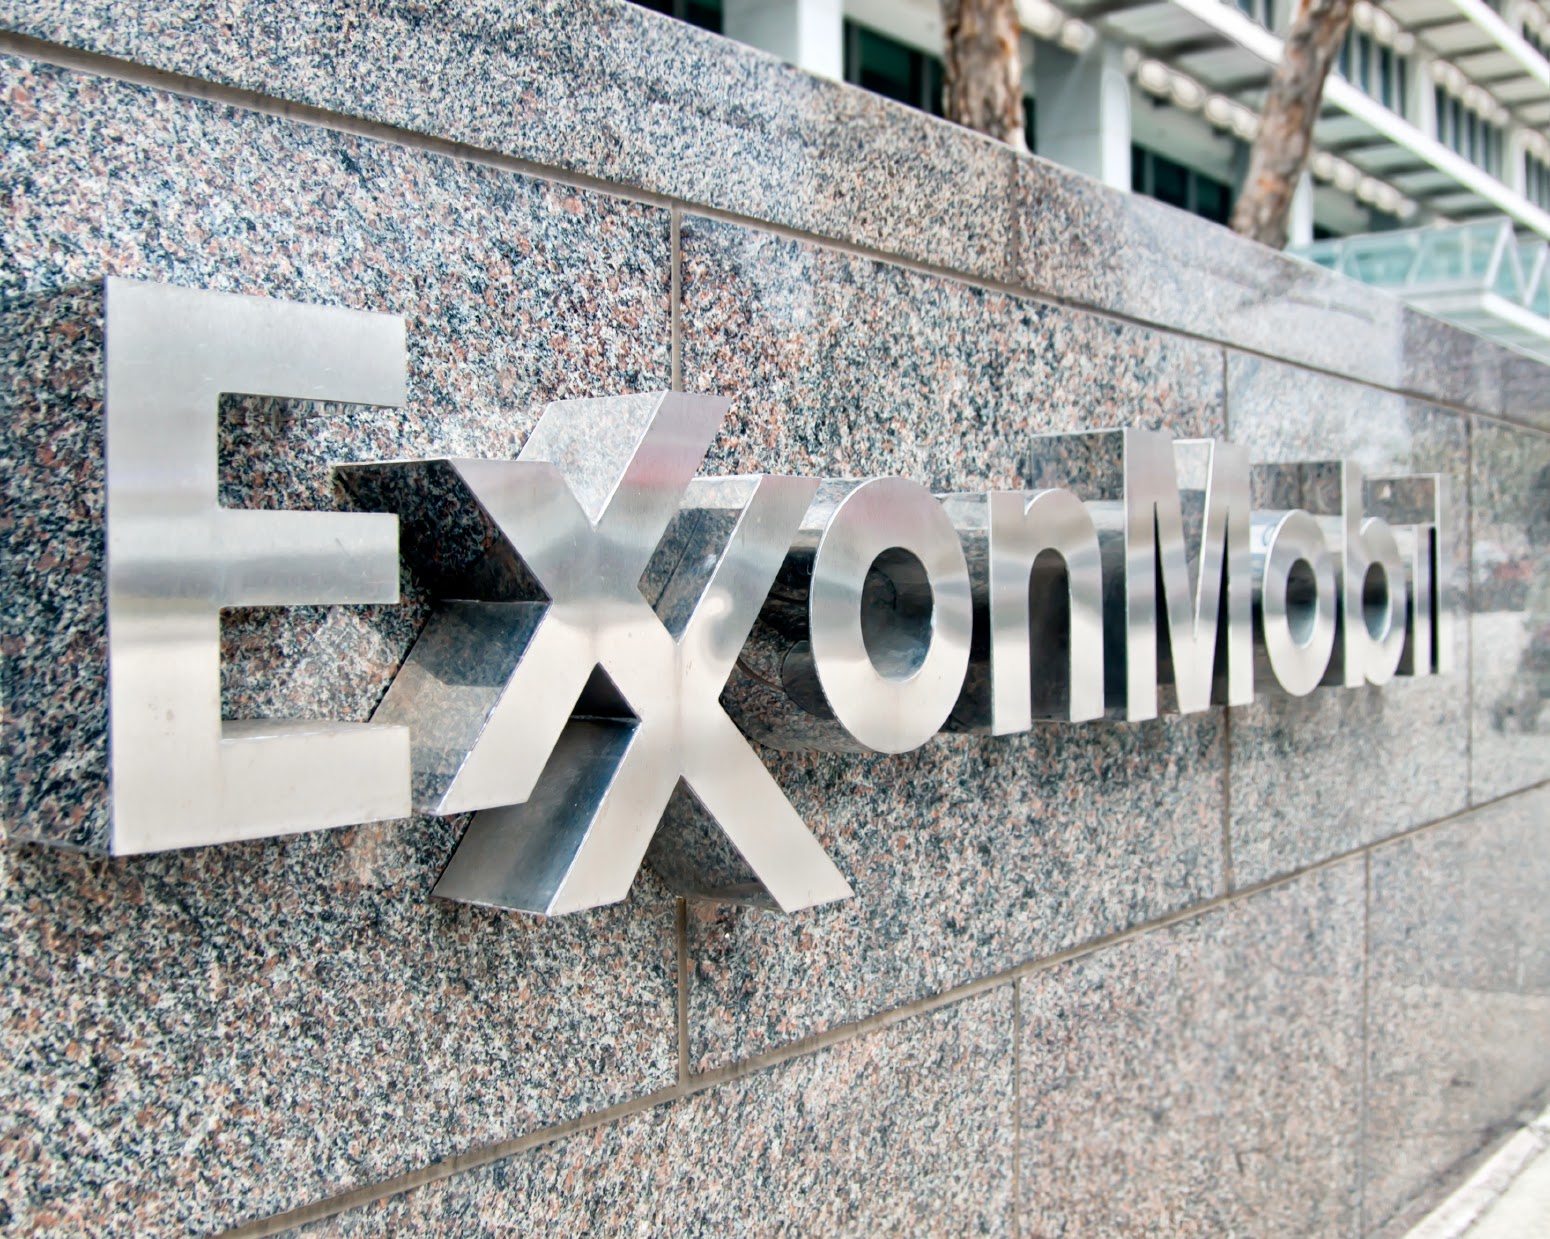 ExxonMobil headquarters